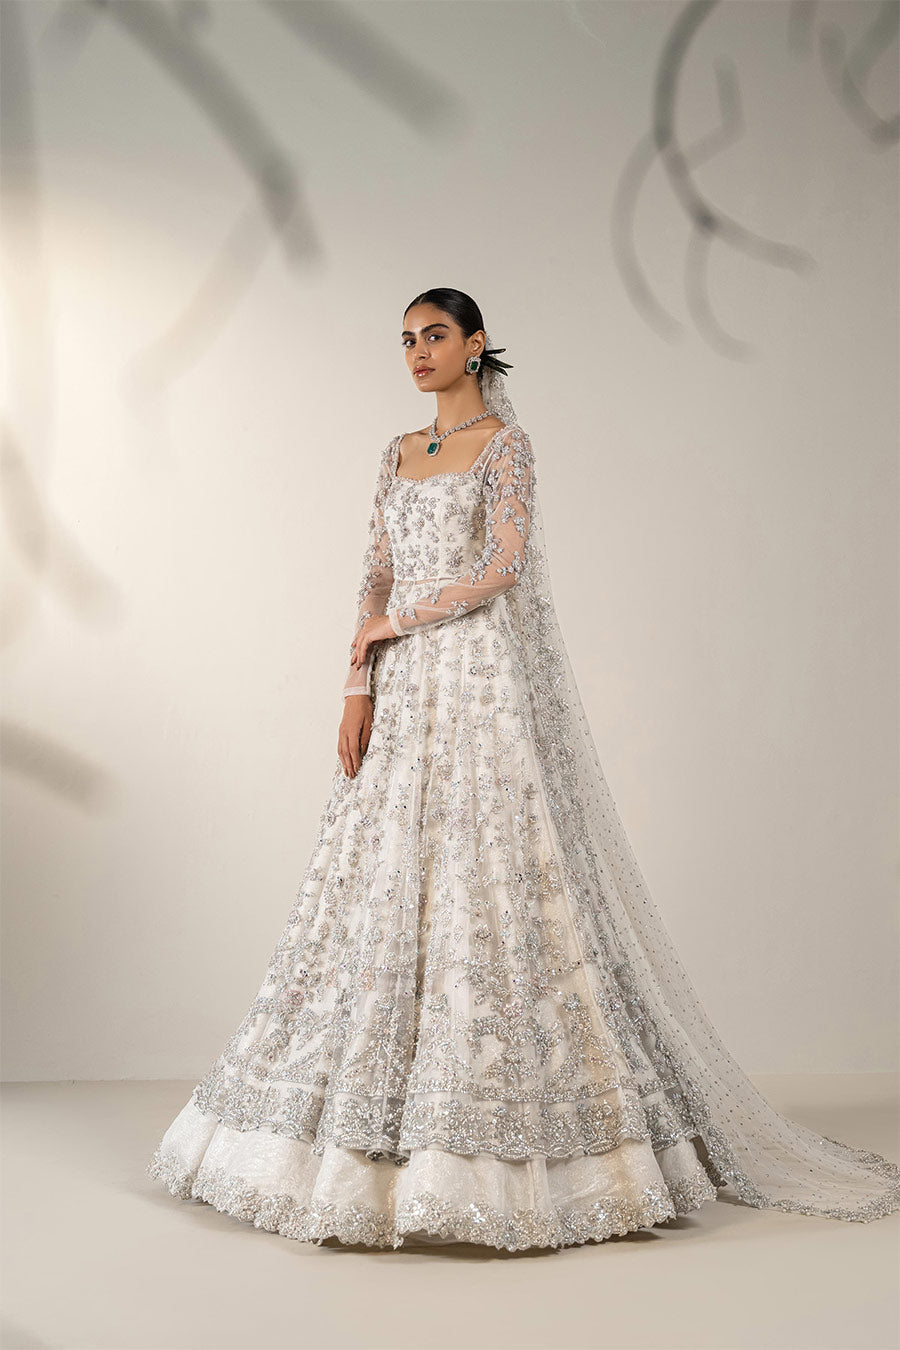 pakistani dress bride